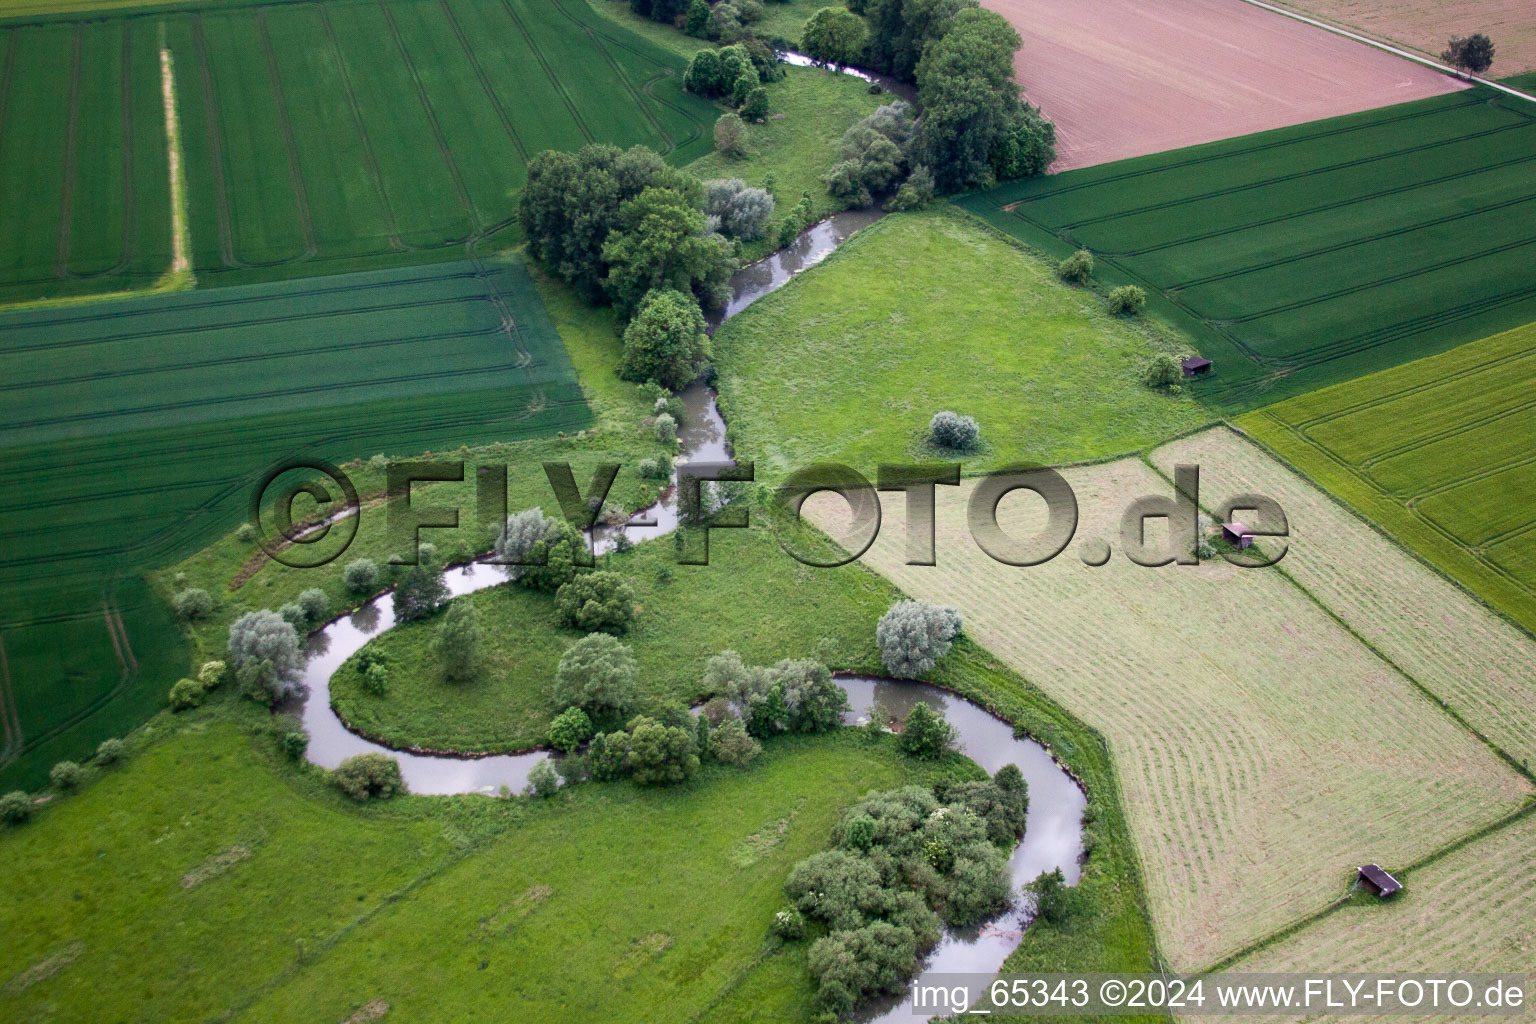 Serpentine curve of a river Nethe in Beverungen in the state North Rhine-Westphalia